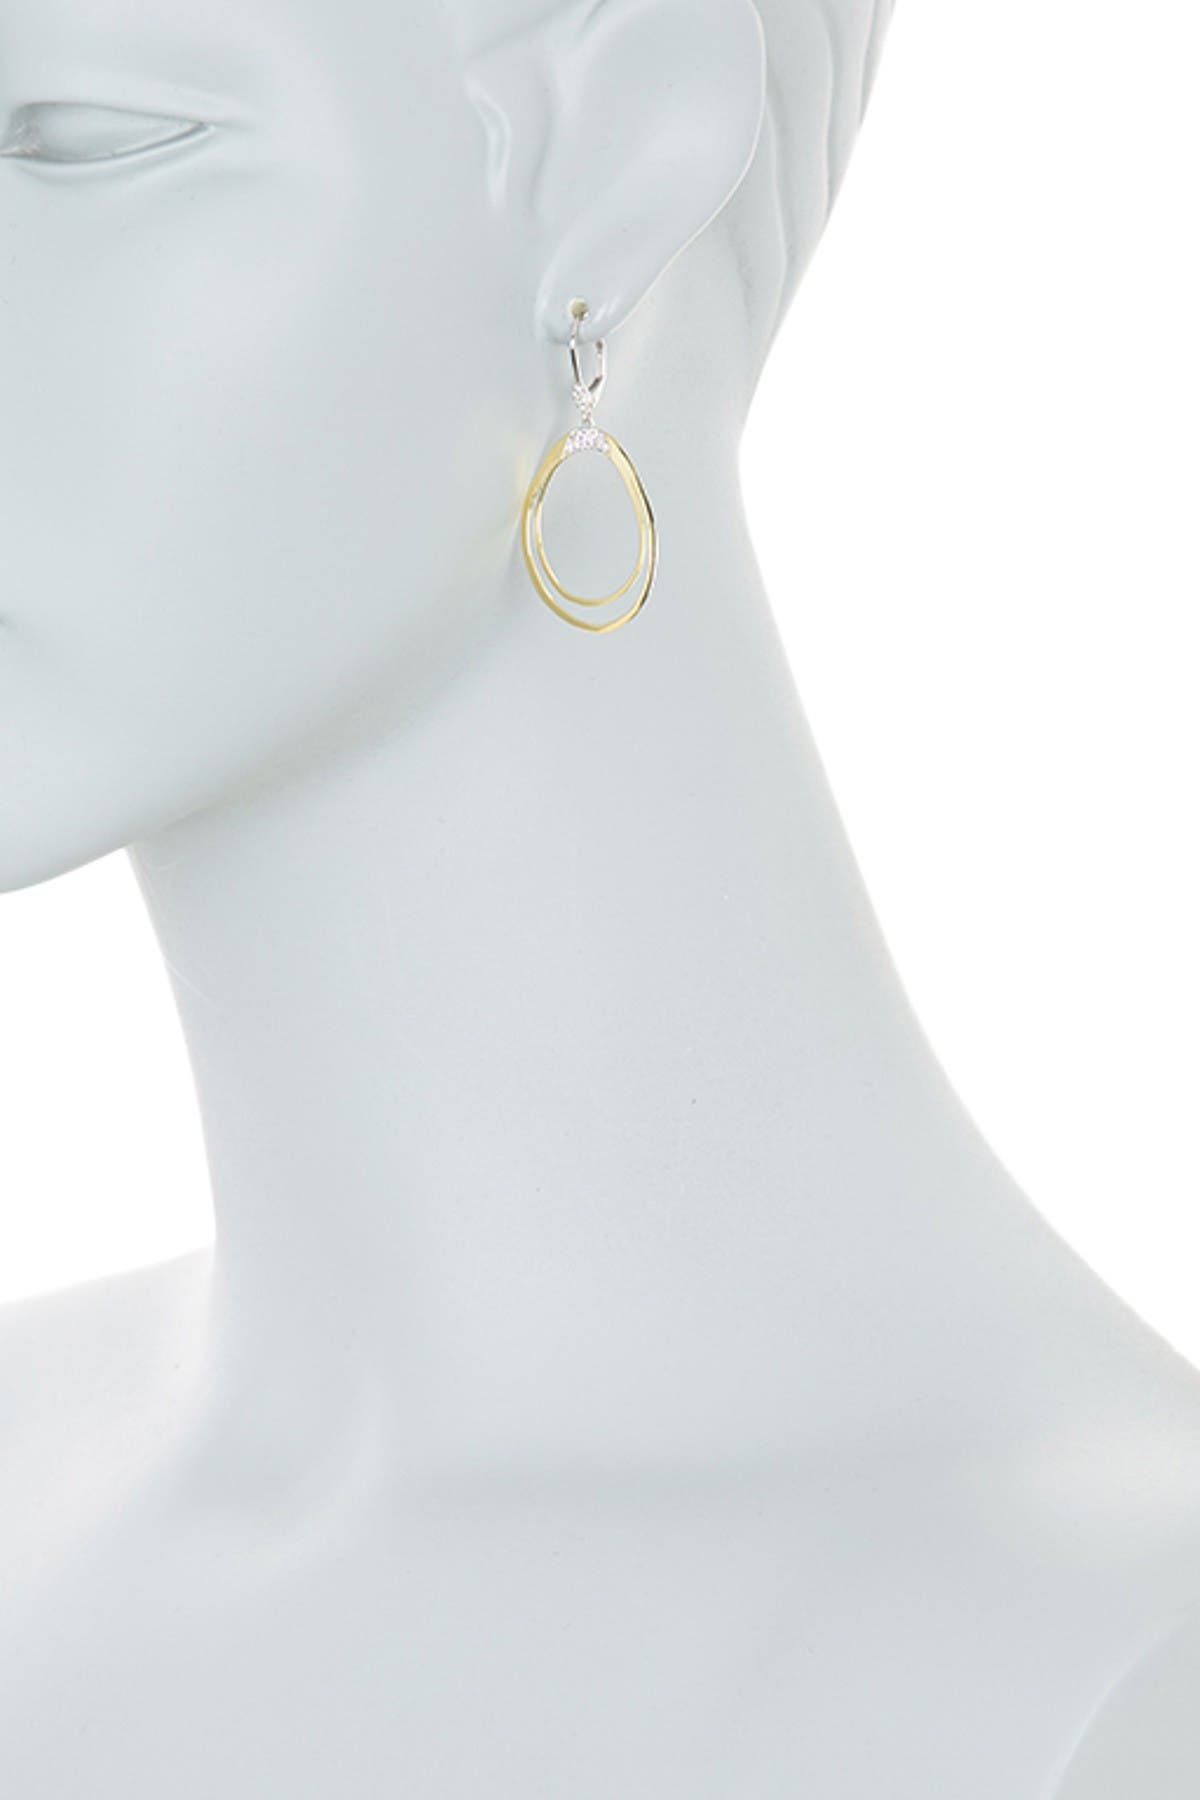 Meira T 14k Yellow Gold Pave Diamond Oval Drop Earrings